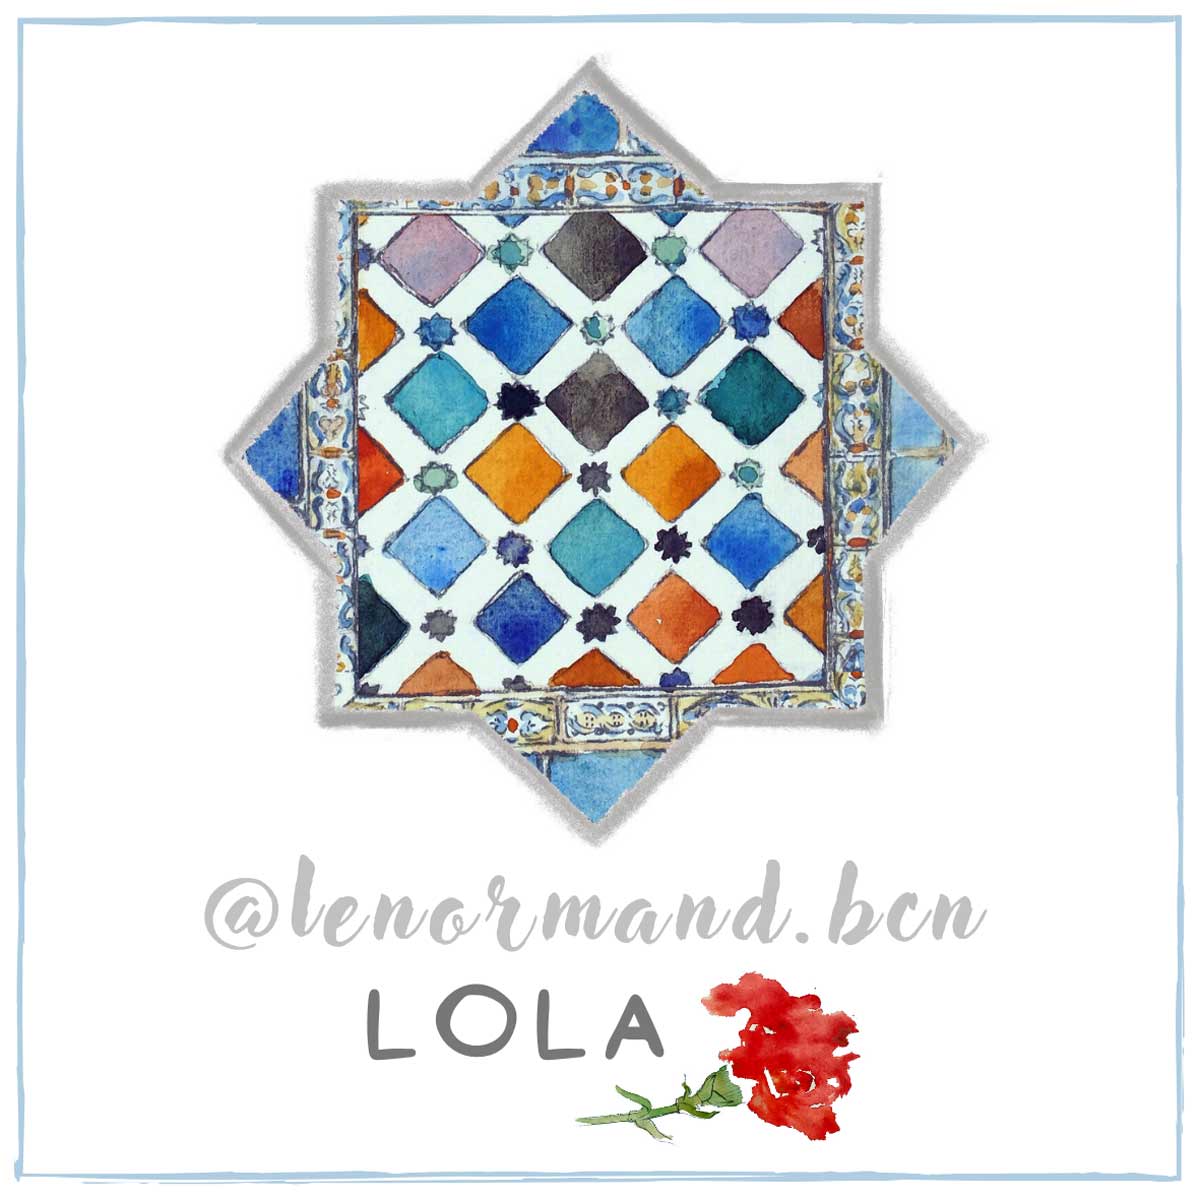 Marina Berdalet - Bugada - logo - Lenormand.bcn - Lola Clavel -2021